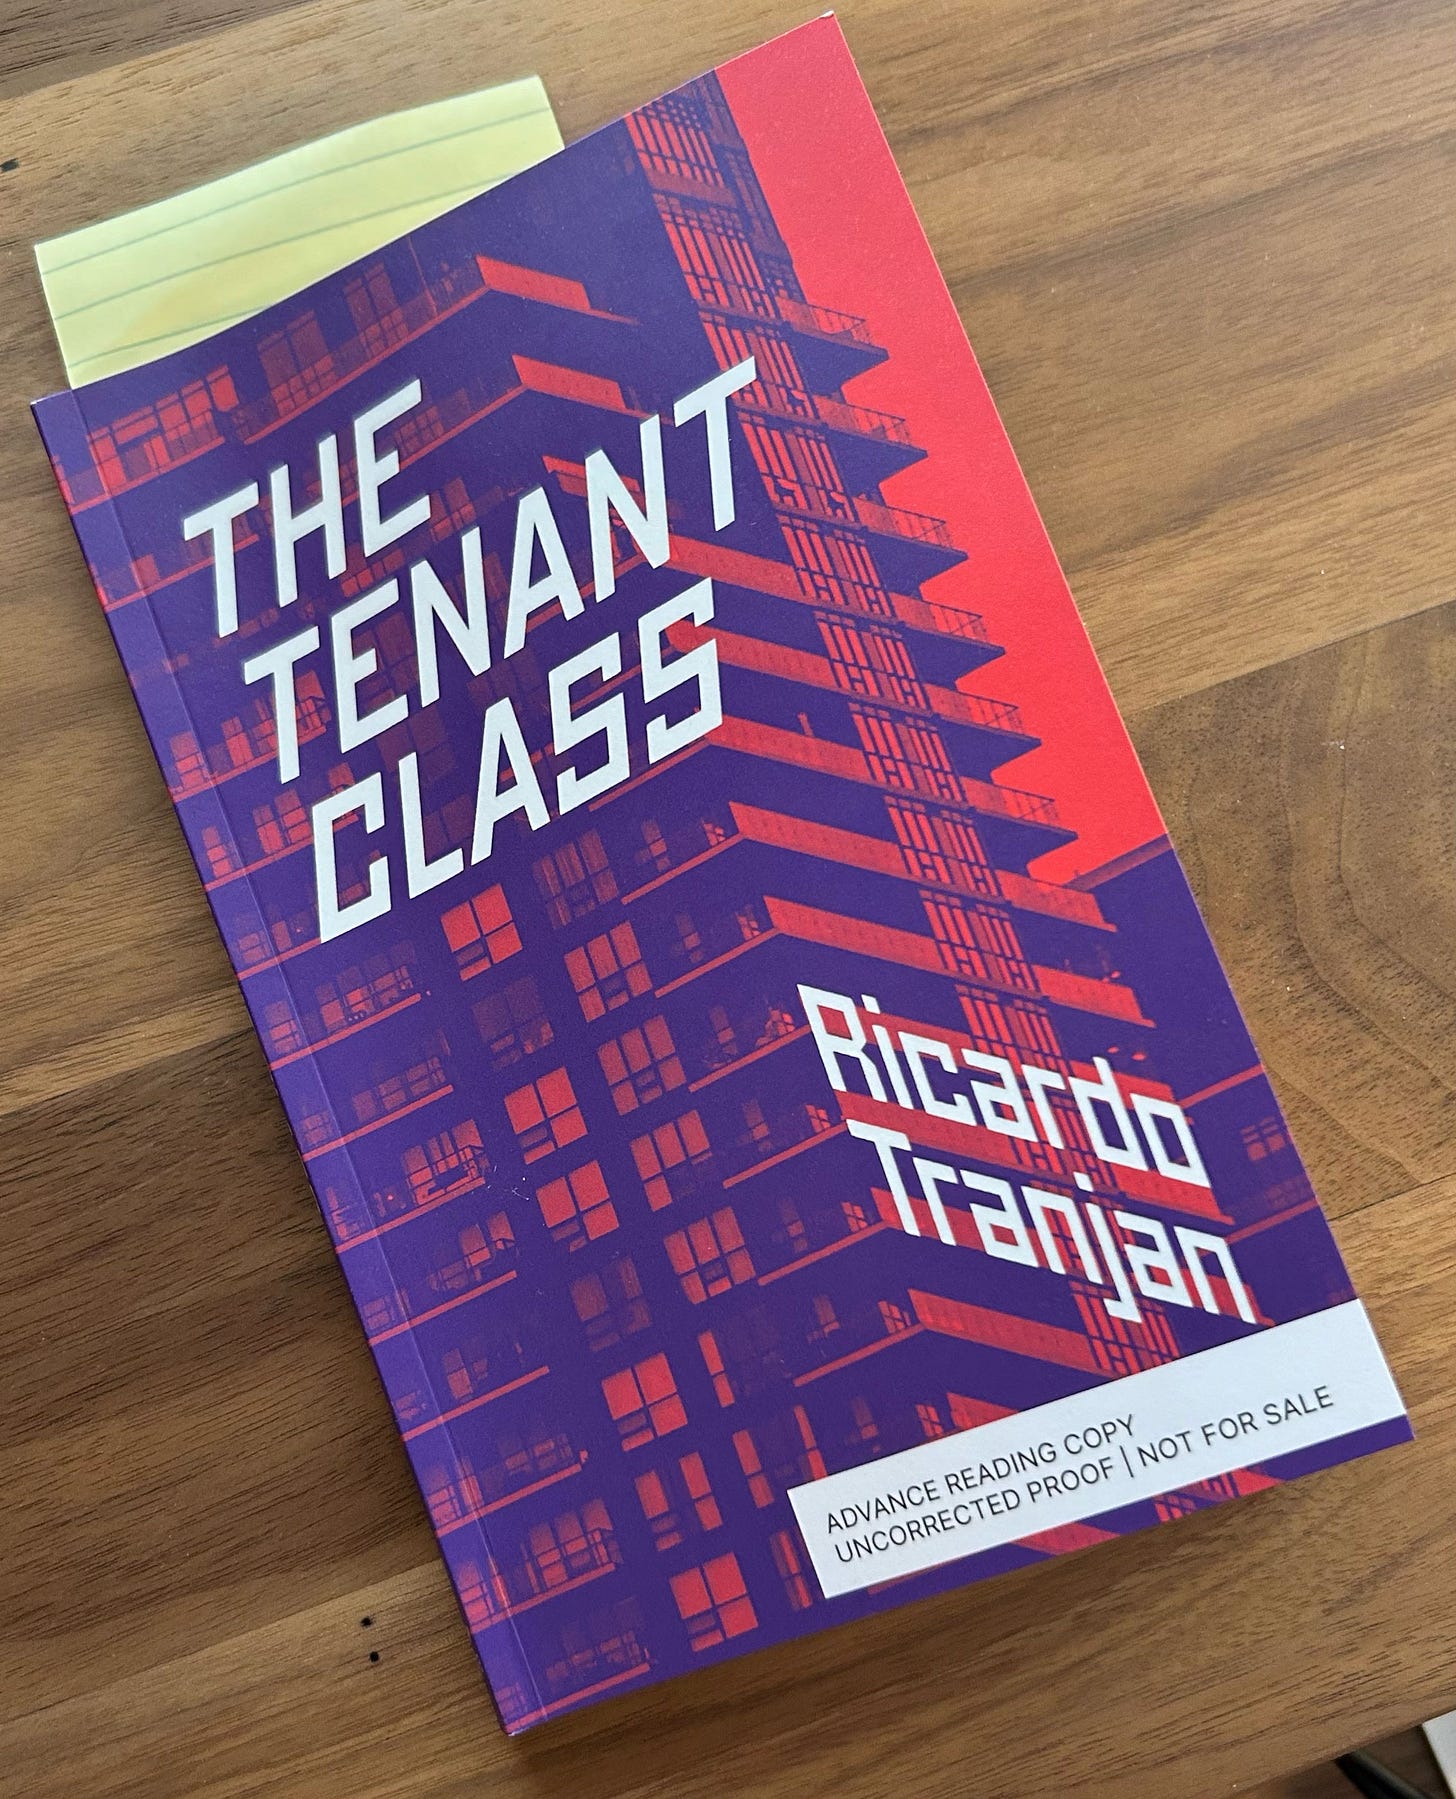 The Tenant Class, a book by Ricardo Tranjan